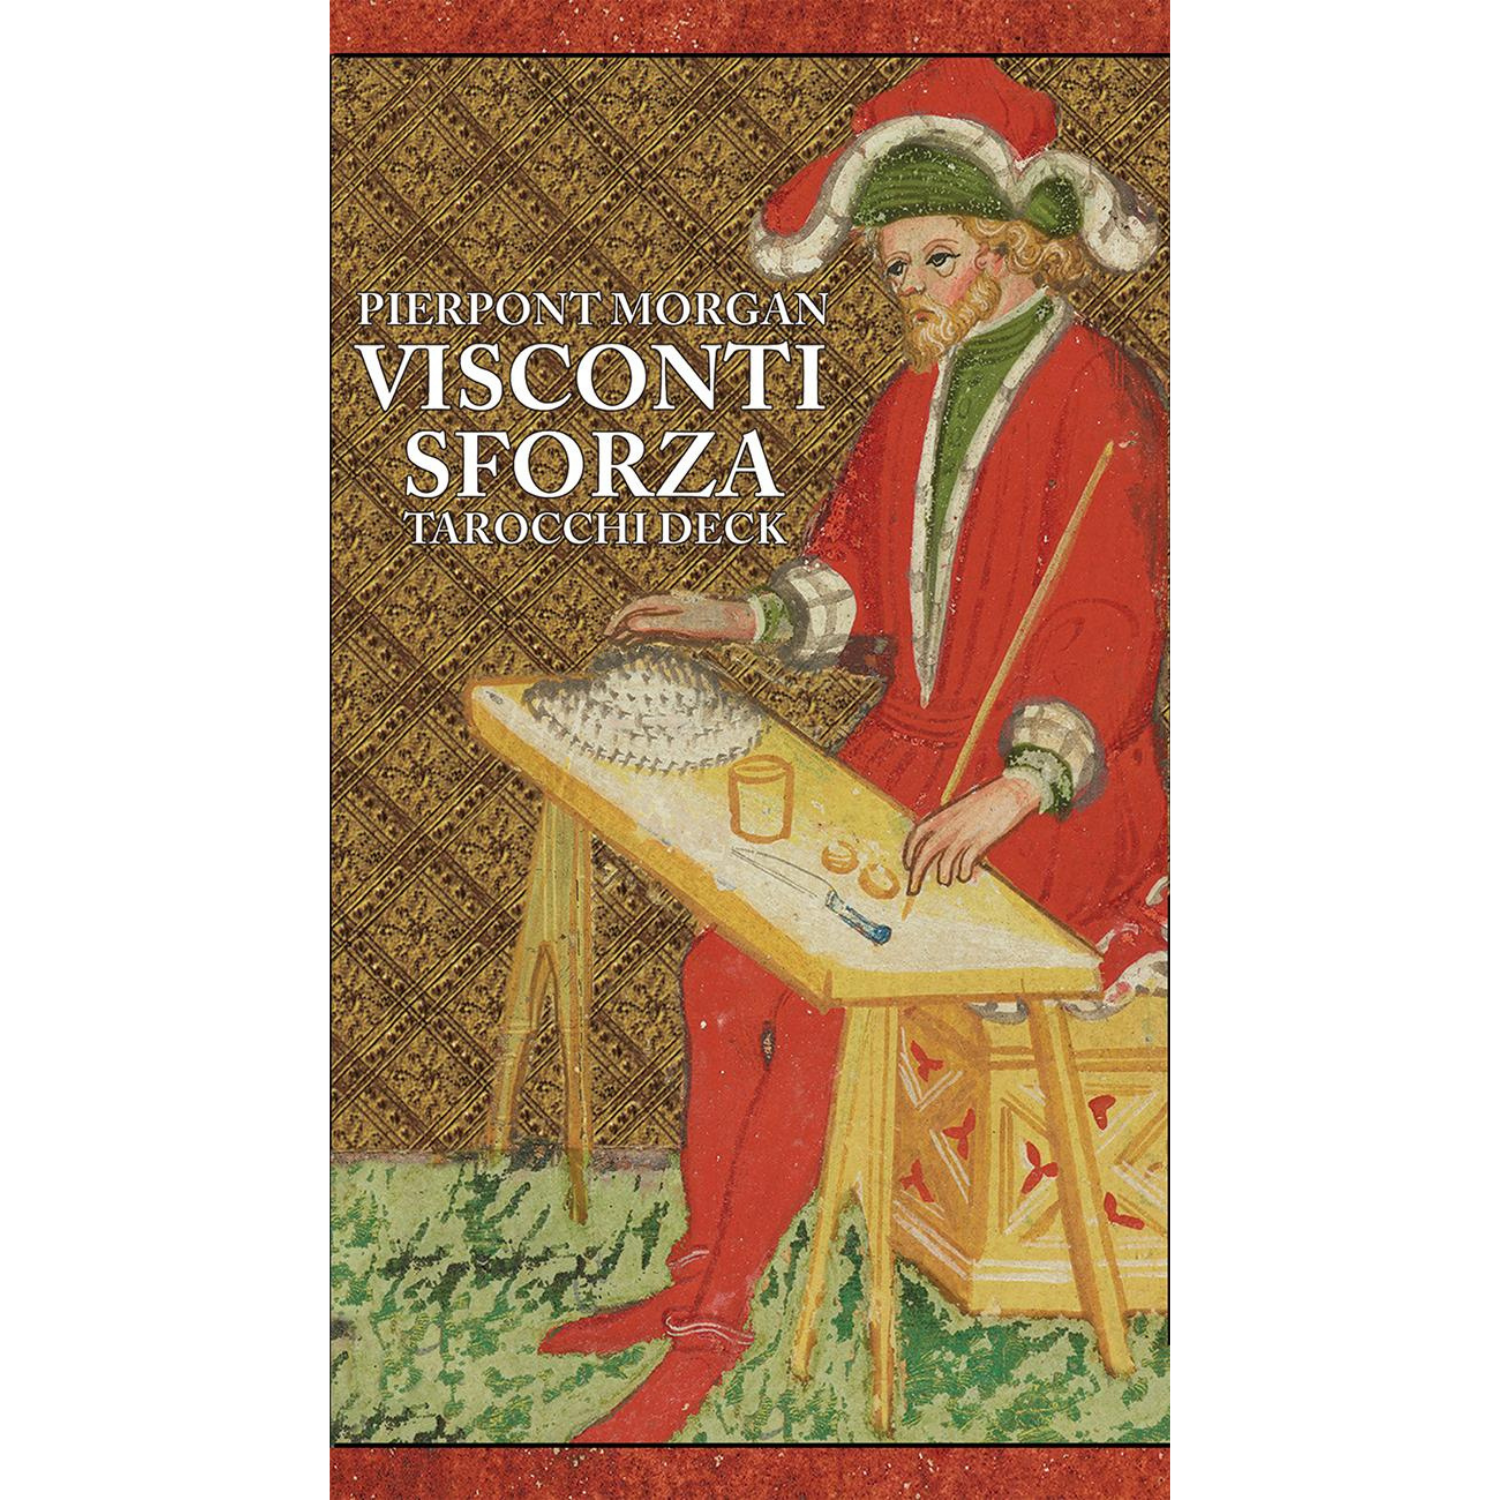 Visconti-Sforza Pierpont Morgan Tarocchi Deck